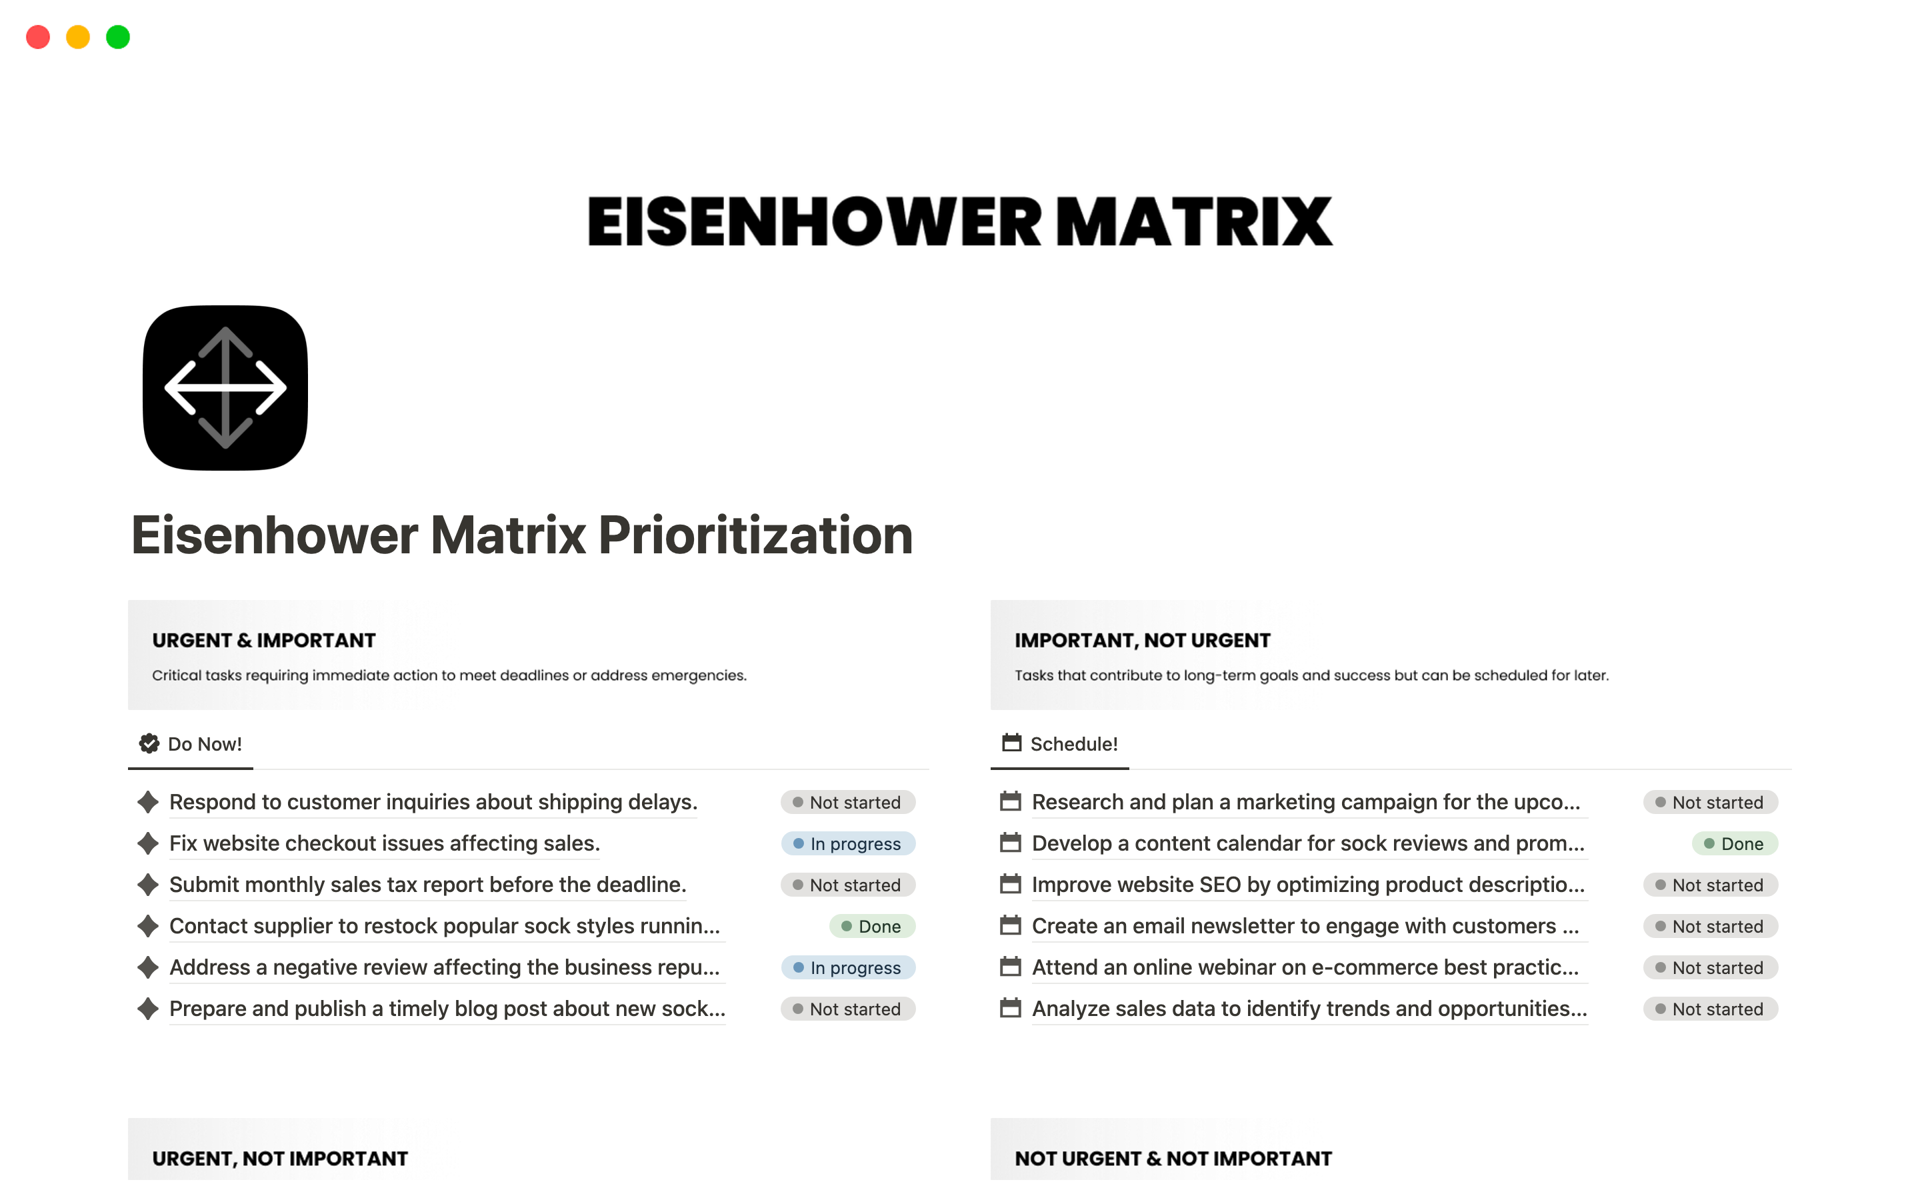 Vista previa de plantilla para Eisenhower Matrix Prioritization